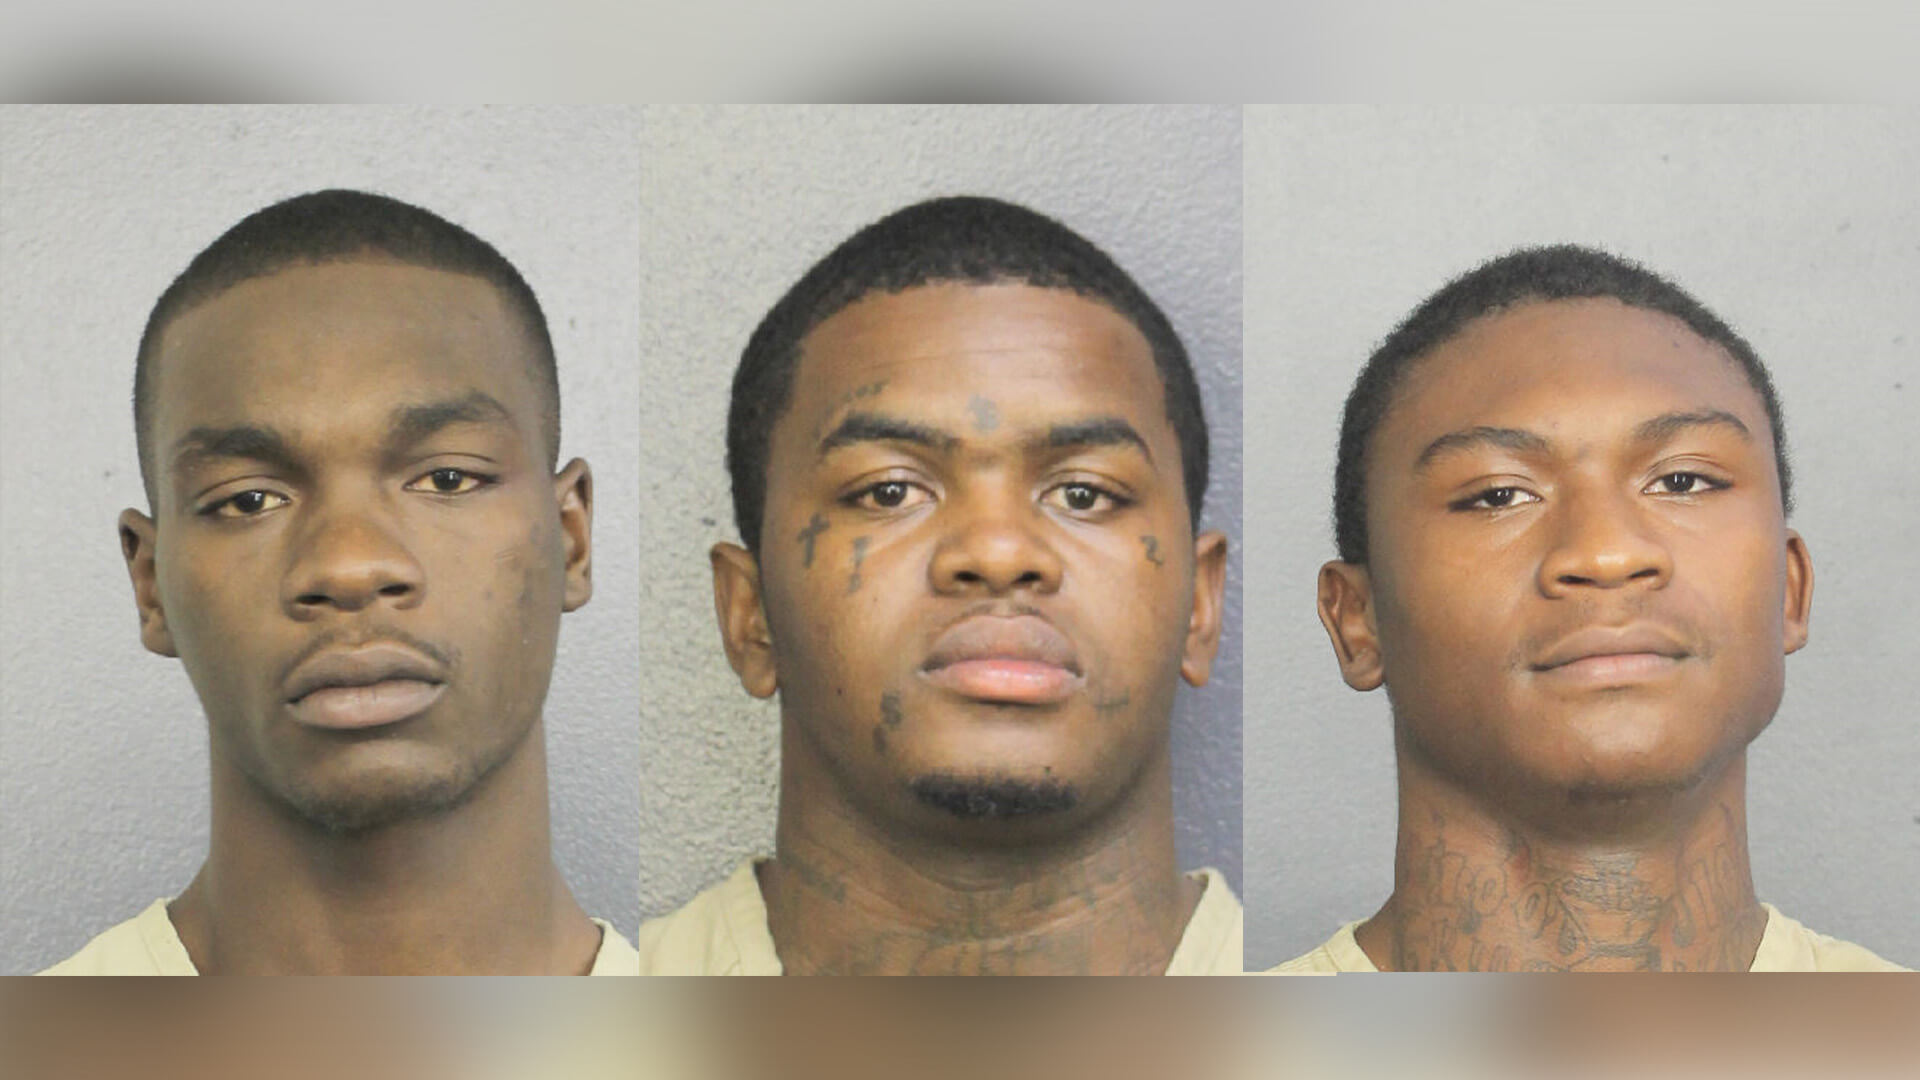 Michael Boatwright, Dedrick Williams and Trayvon Newsome mugshots